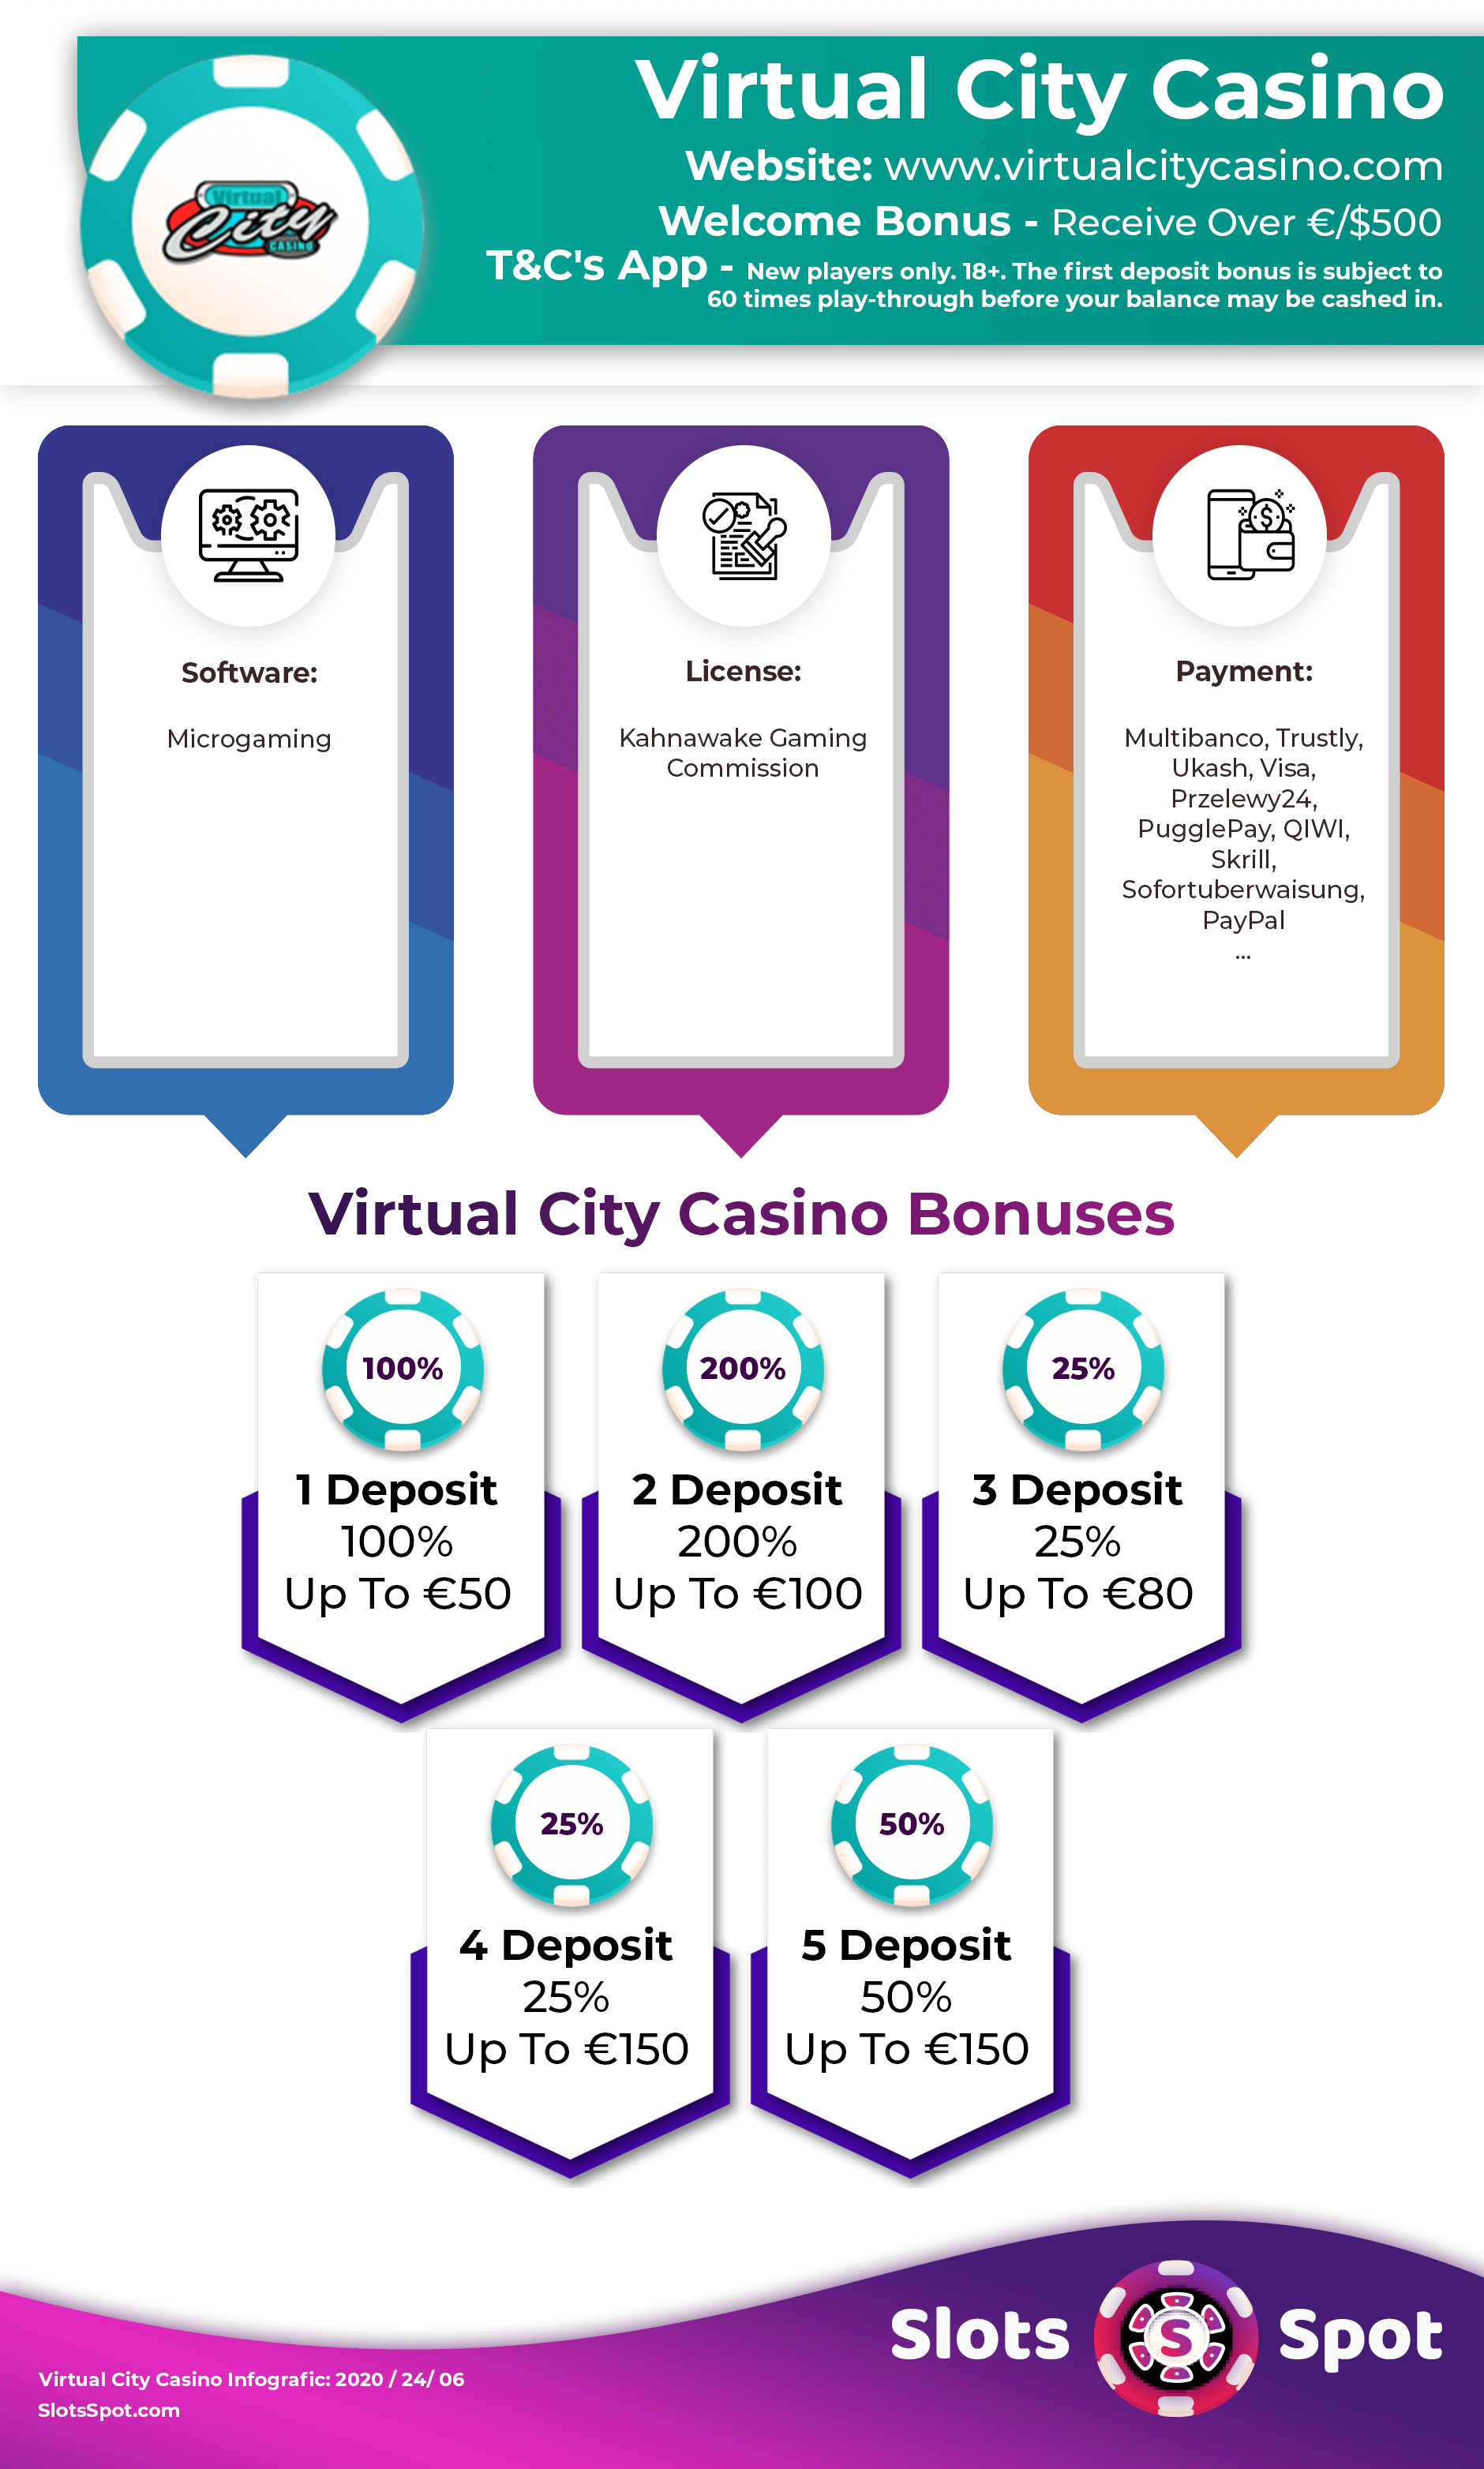 Advanced casinos